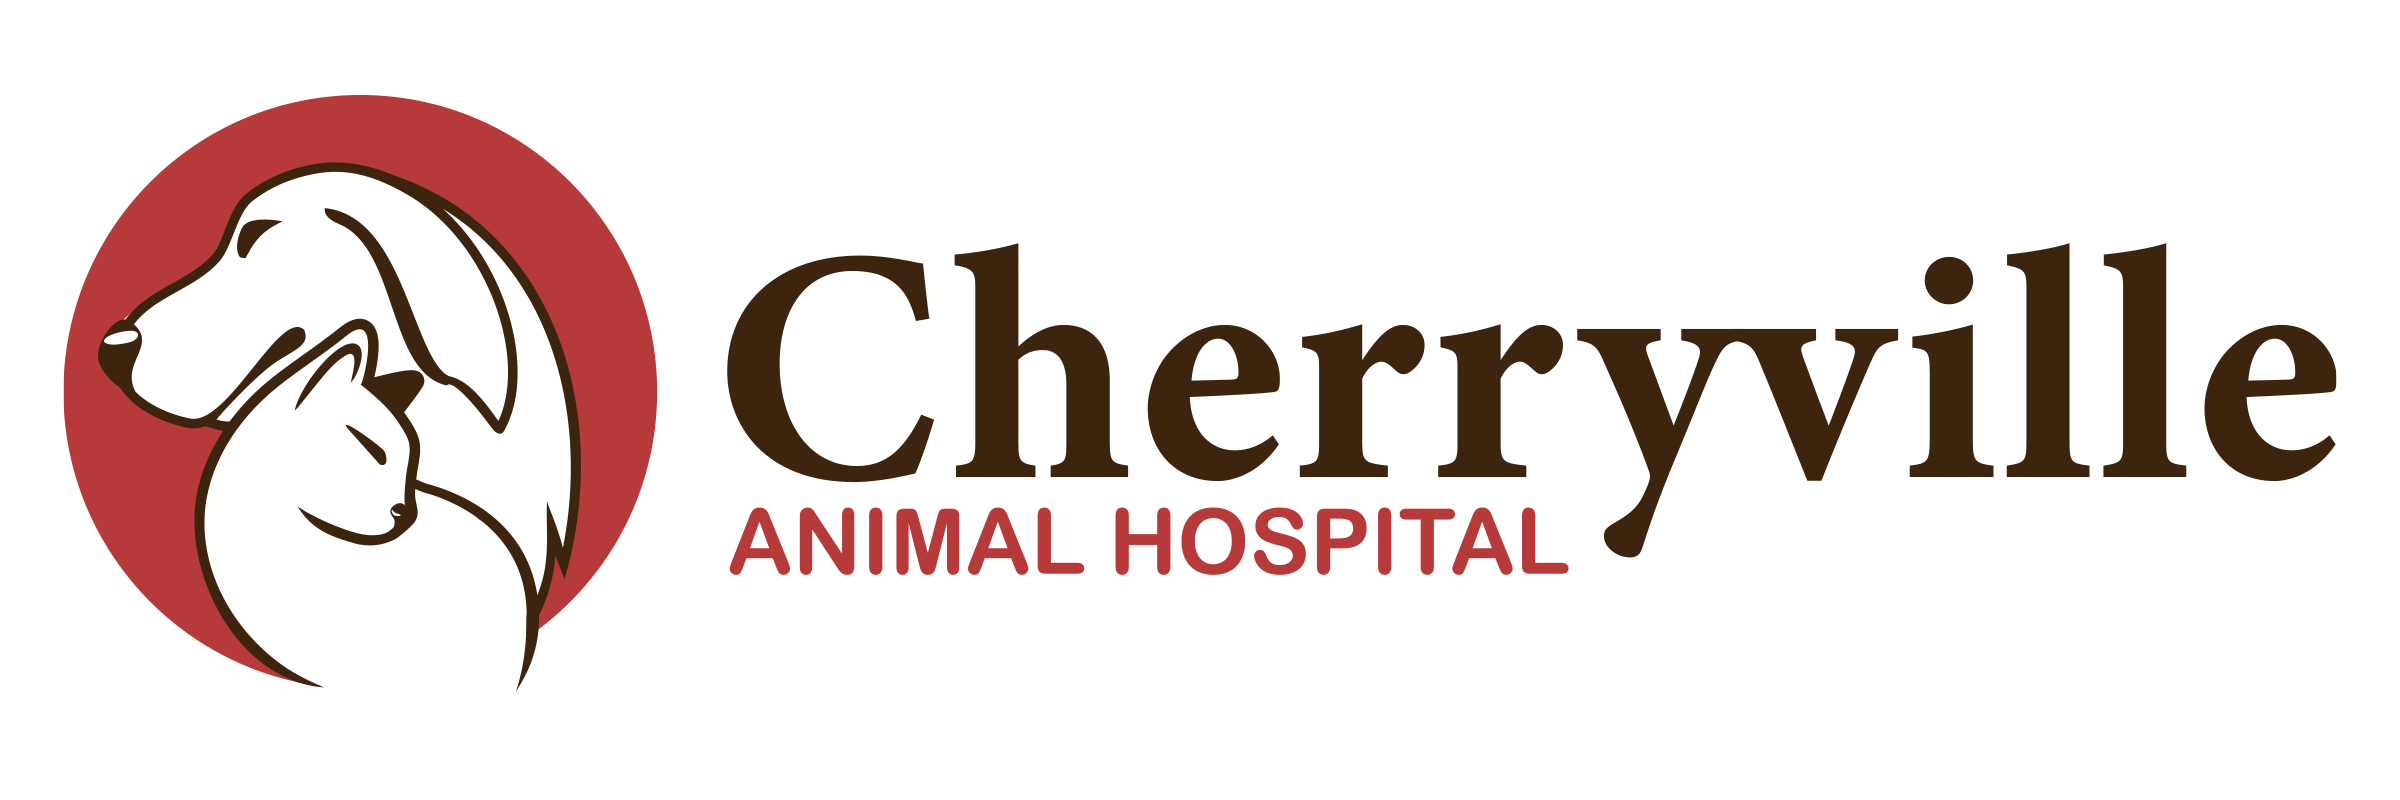 Cherryville Animal Hospital - Veterinarian in Cherryville, NC US